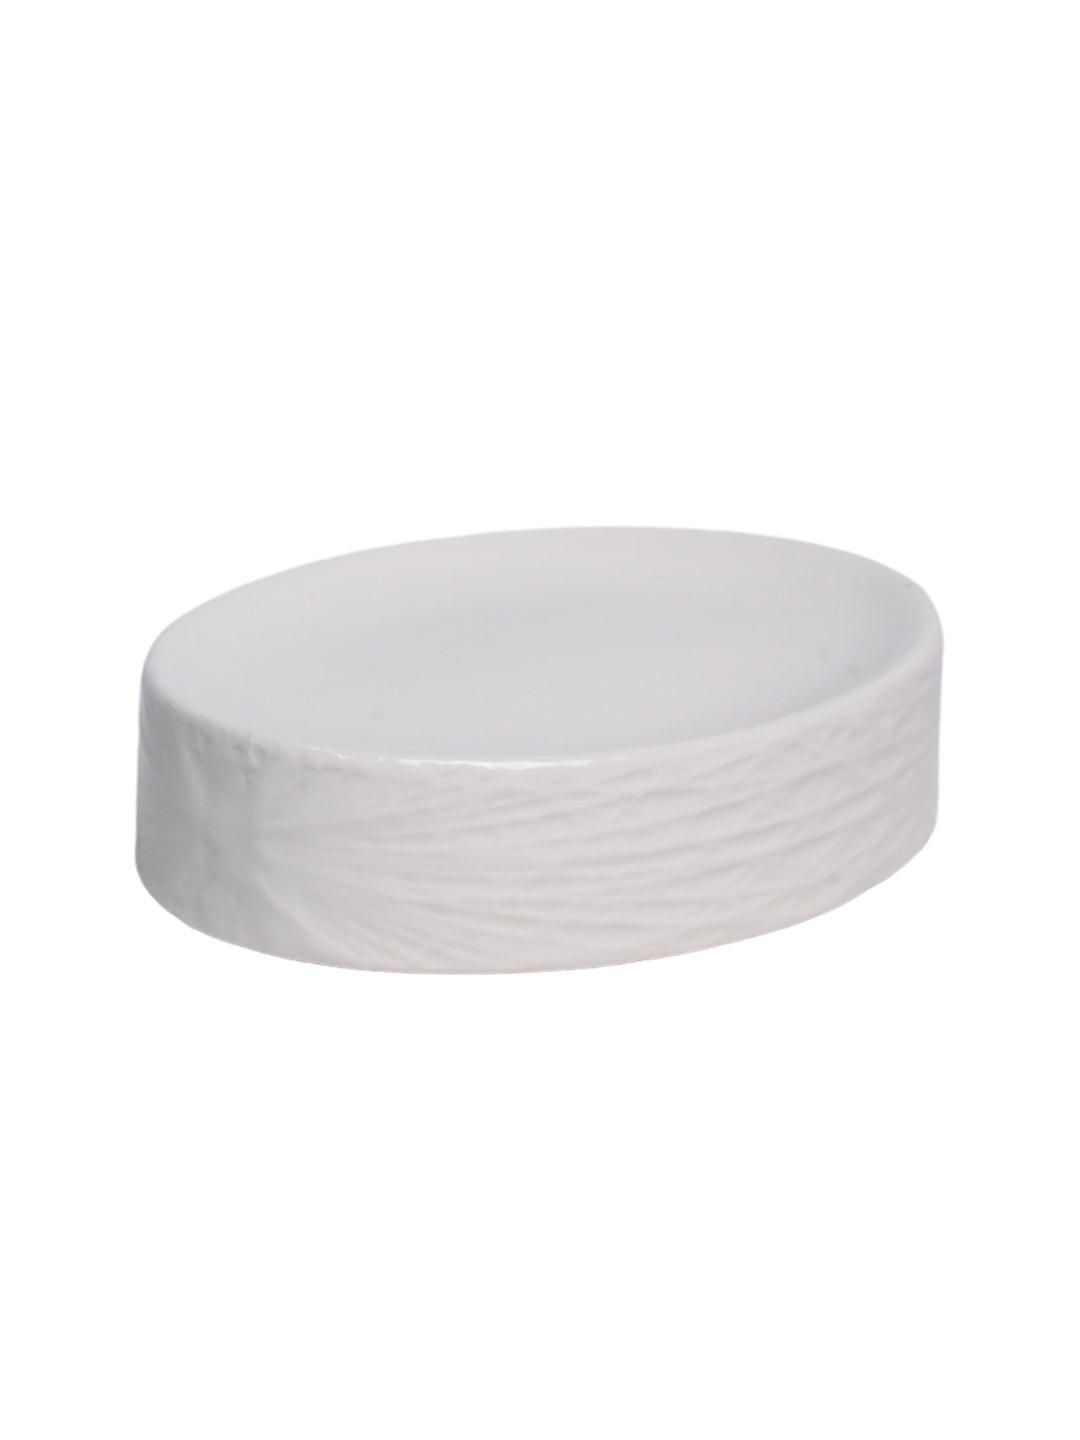 White Ceramic Bathroom Set - Matte, Geometric Pattern - MARKET 99